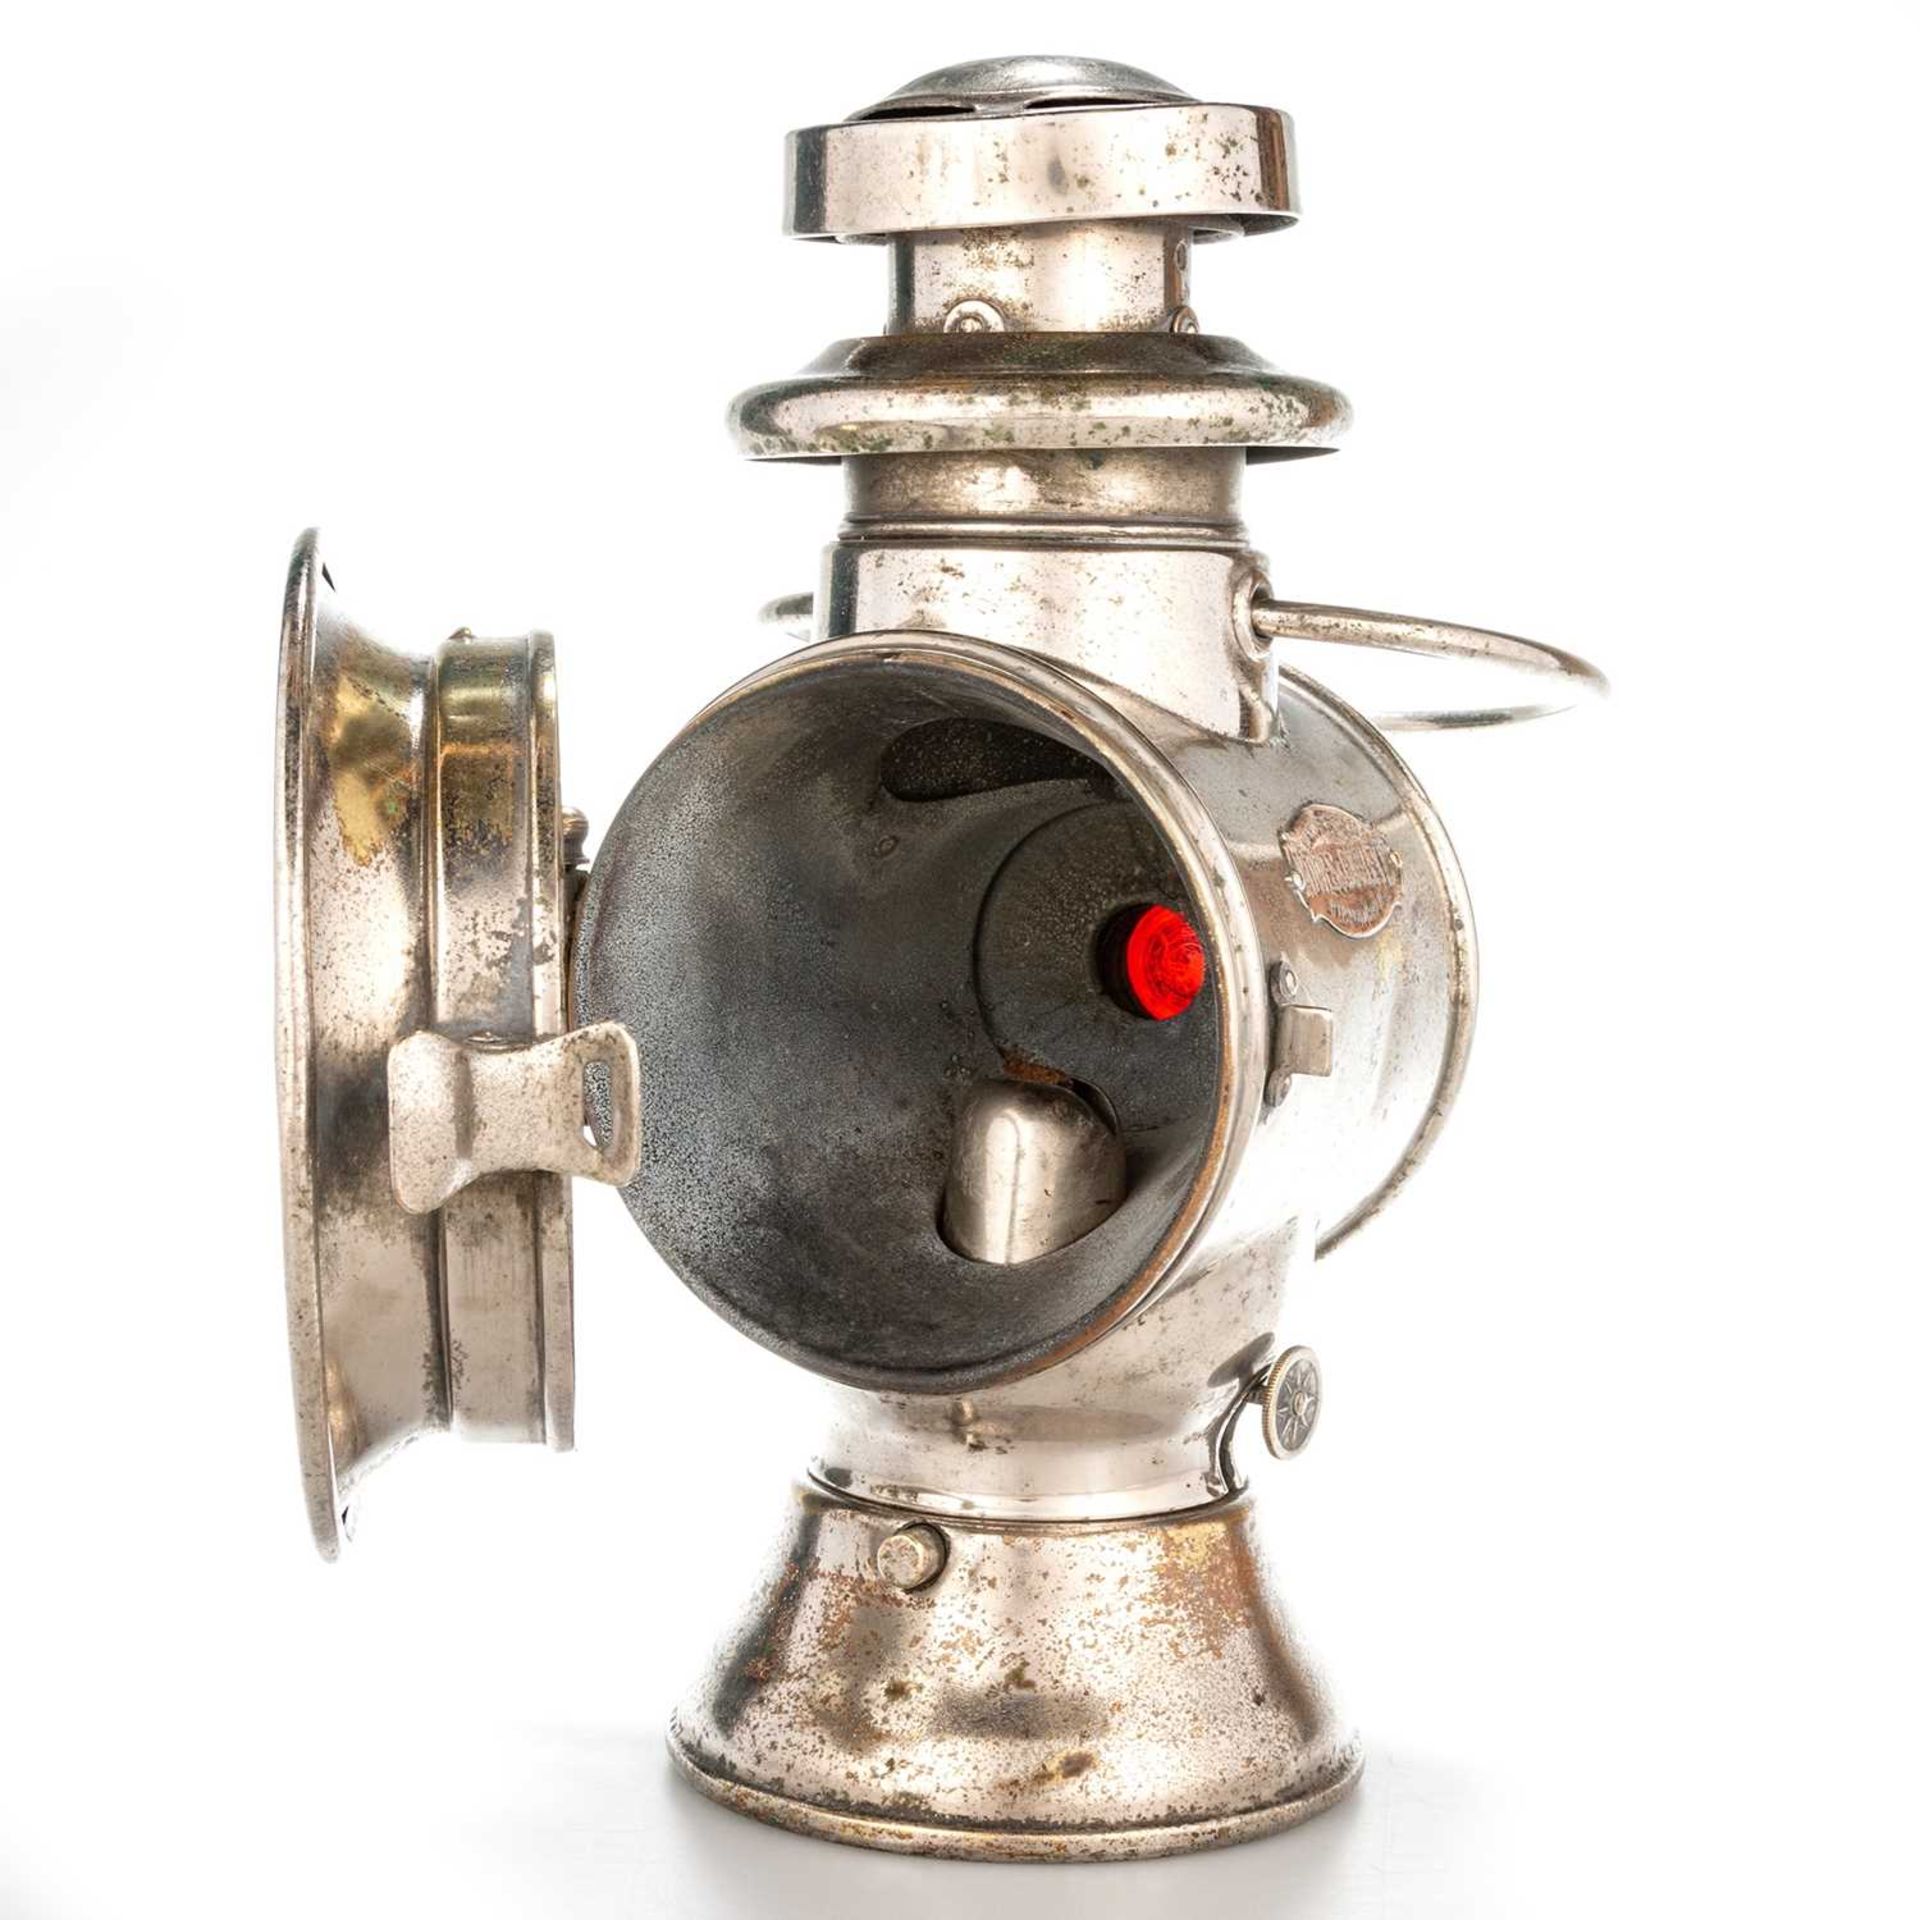 A HOWES & BURLEY LTD CHROMED OIL SIDE LAMP - Image 3 of 4